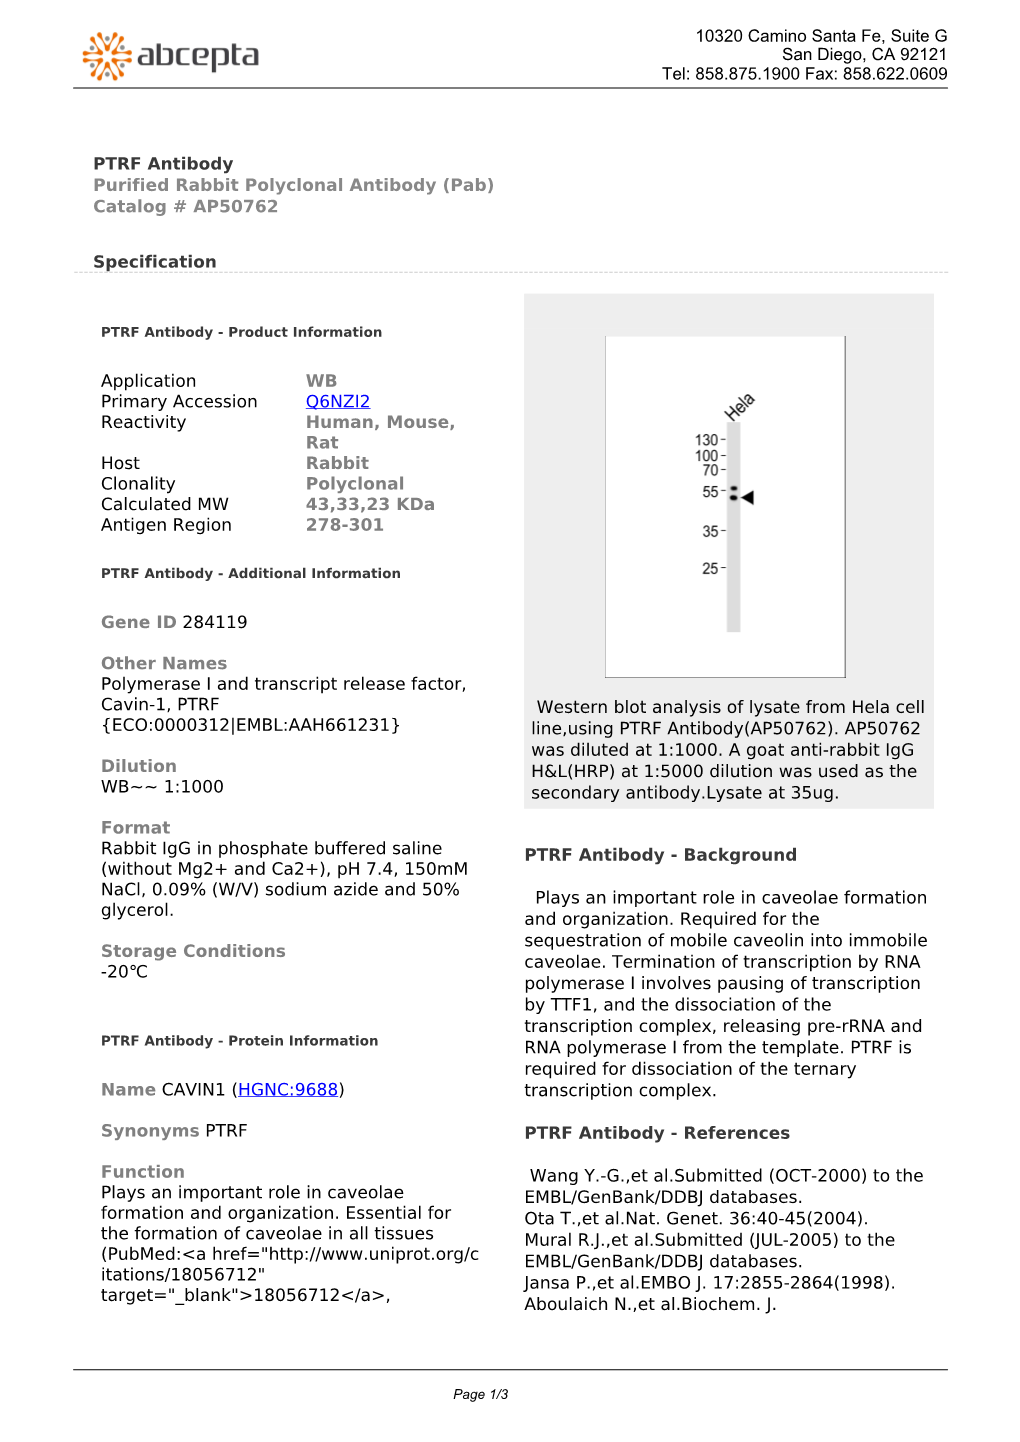 PTRF Antibody Purified Rabbit Polyclonal Antibody (Pab) Catalog # AP50762